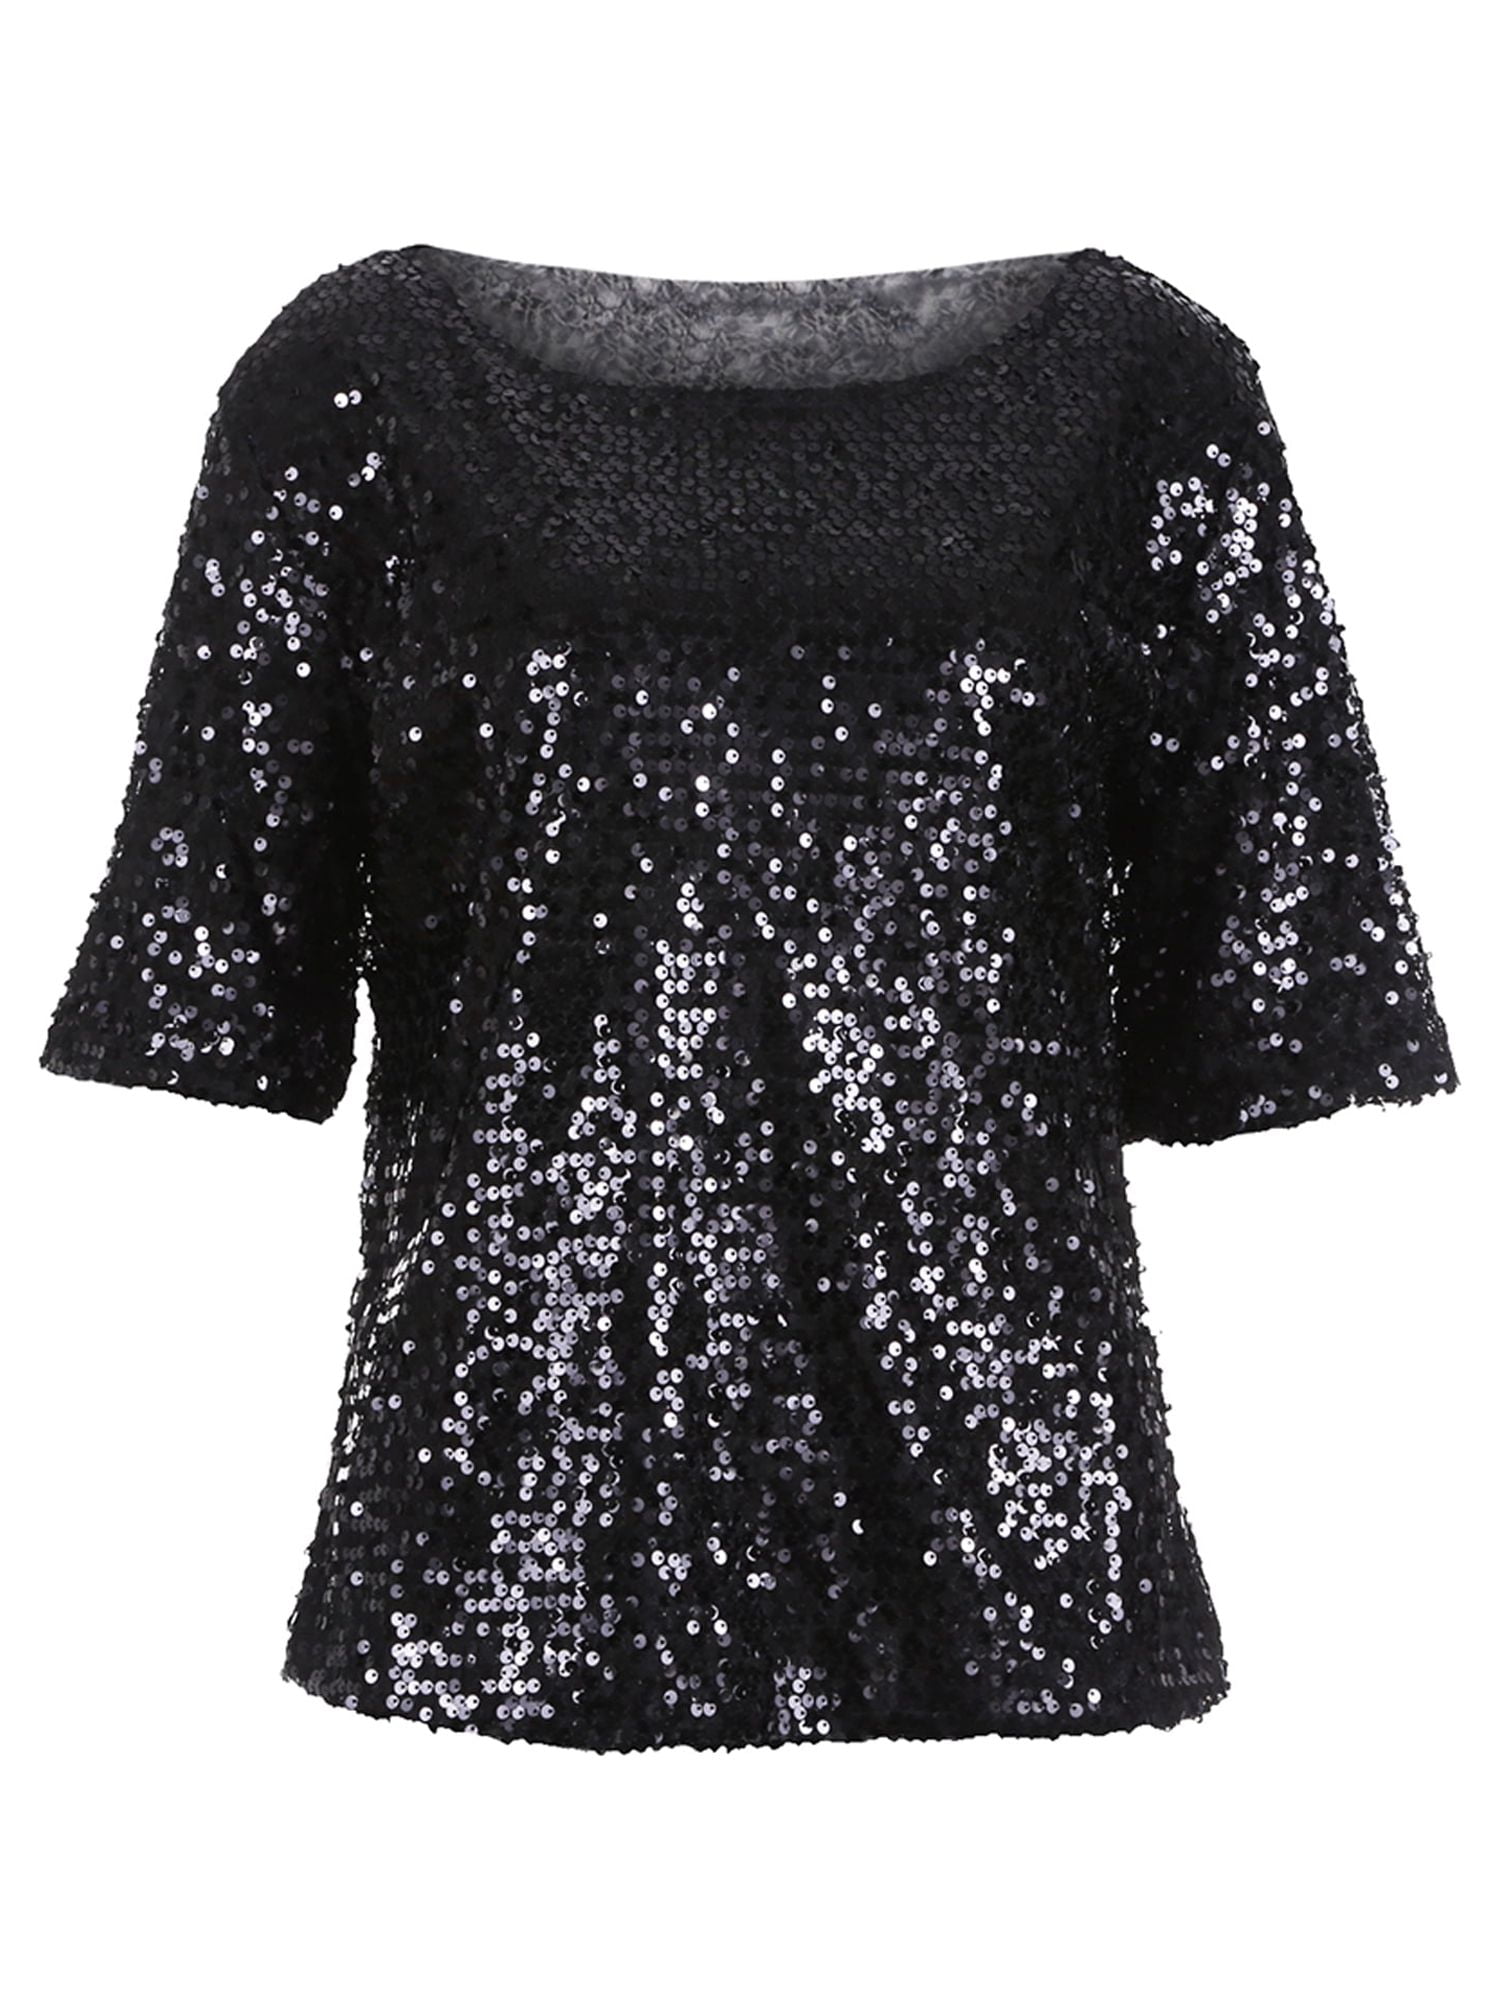 Buy Glam and Gloria Women's Black Sequin Sparkling Glitter Shiny